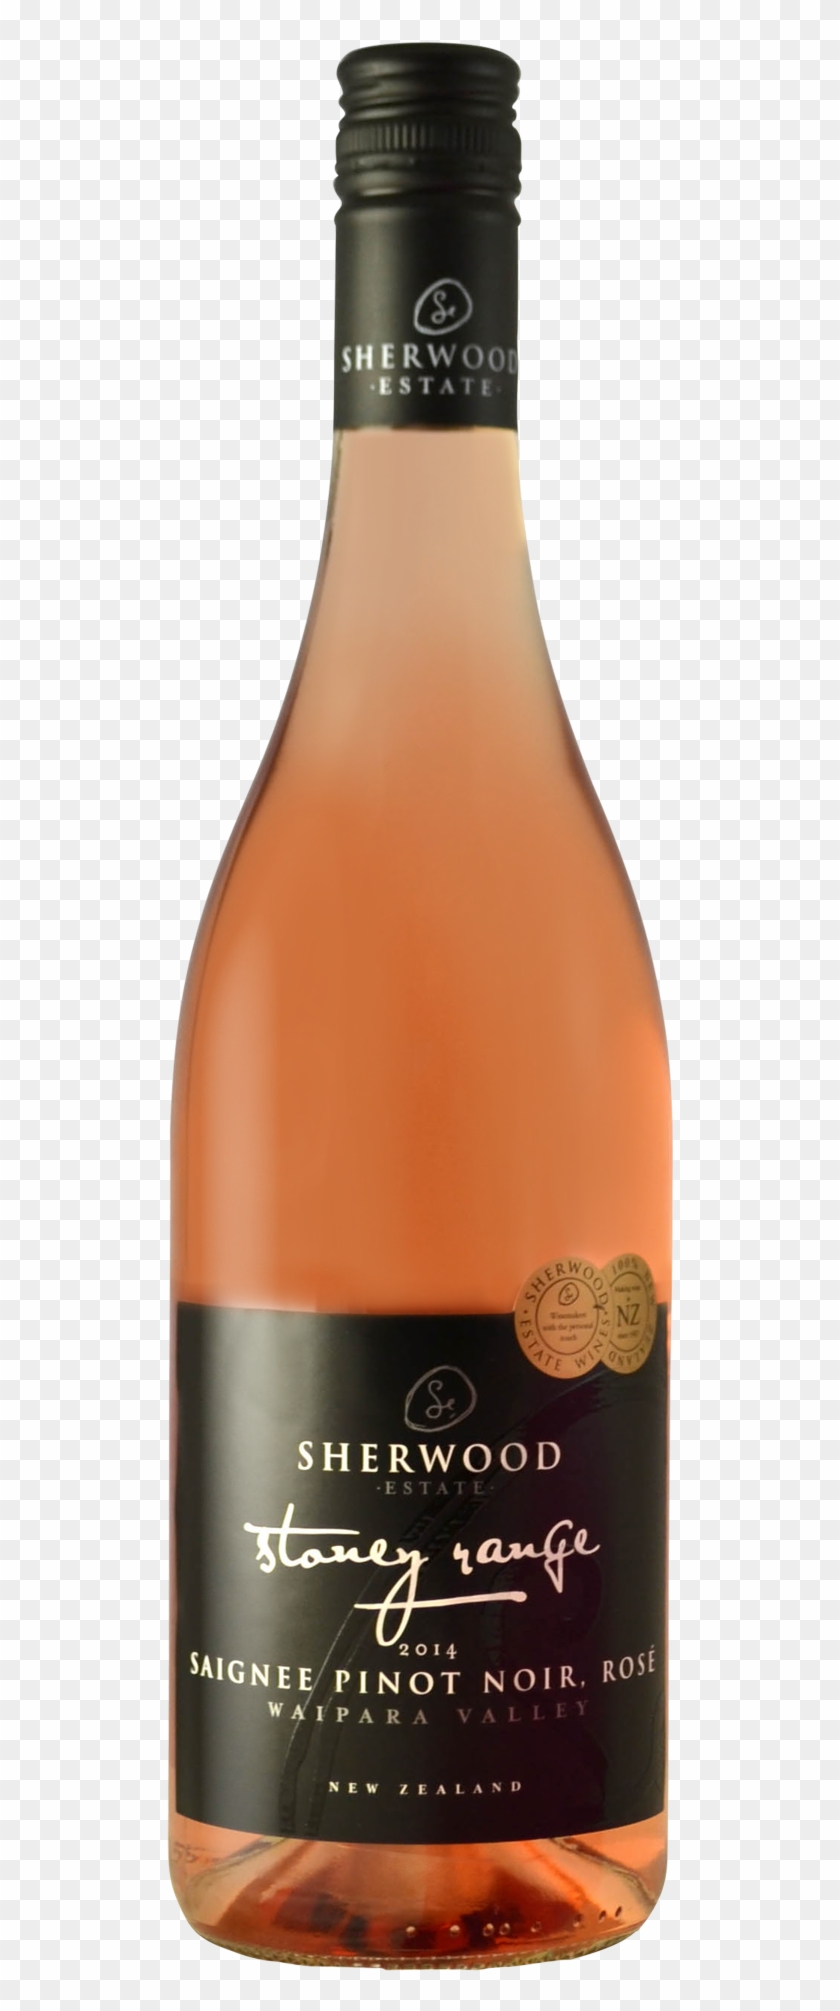 Sherwood Estate Stoney Range Saignee Pinot Noir Rose - Glass Bottle Clipart #4878915